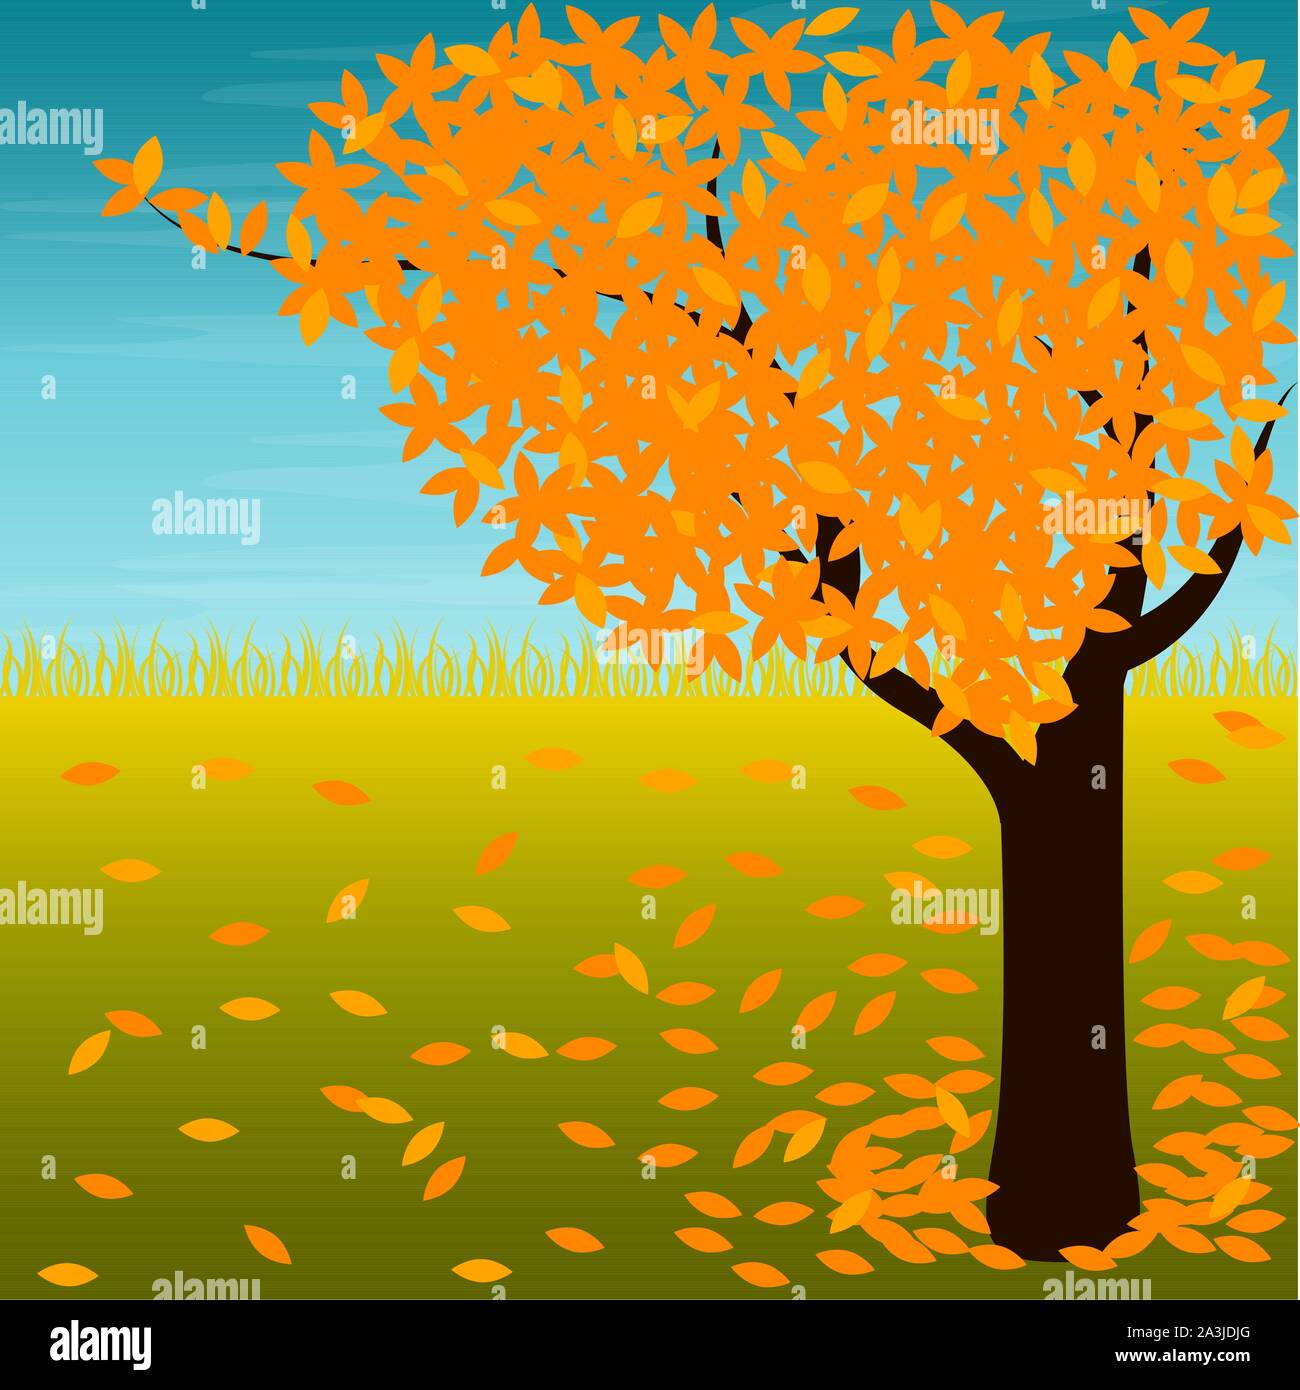 beautiful autumn natural landscape image - Vector illustration Stock Vector